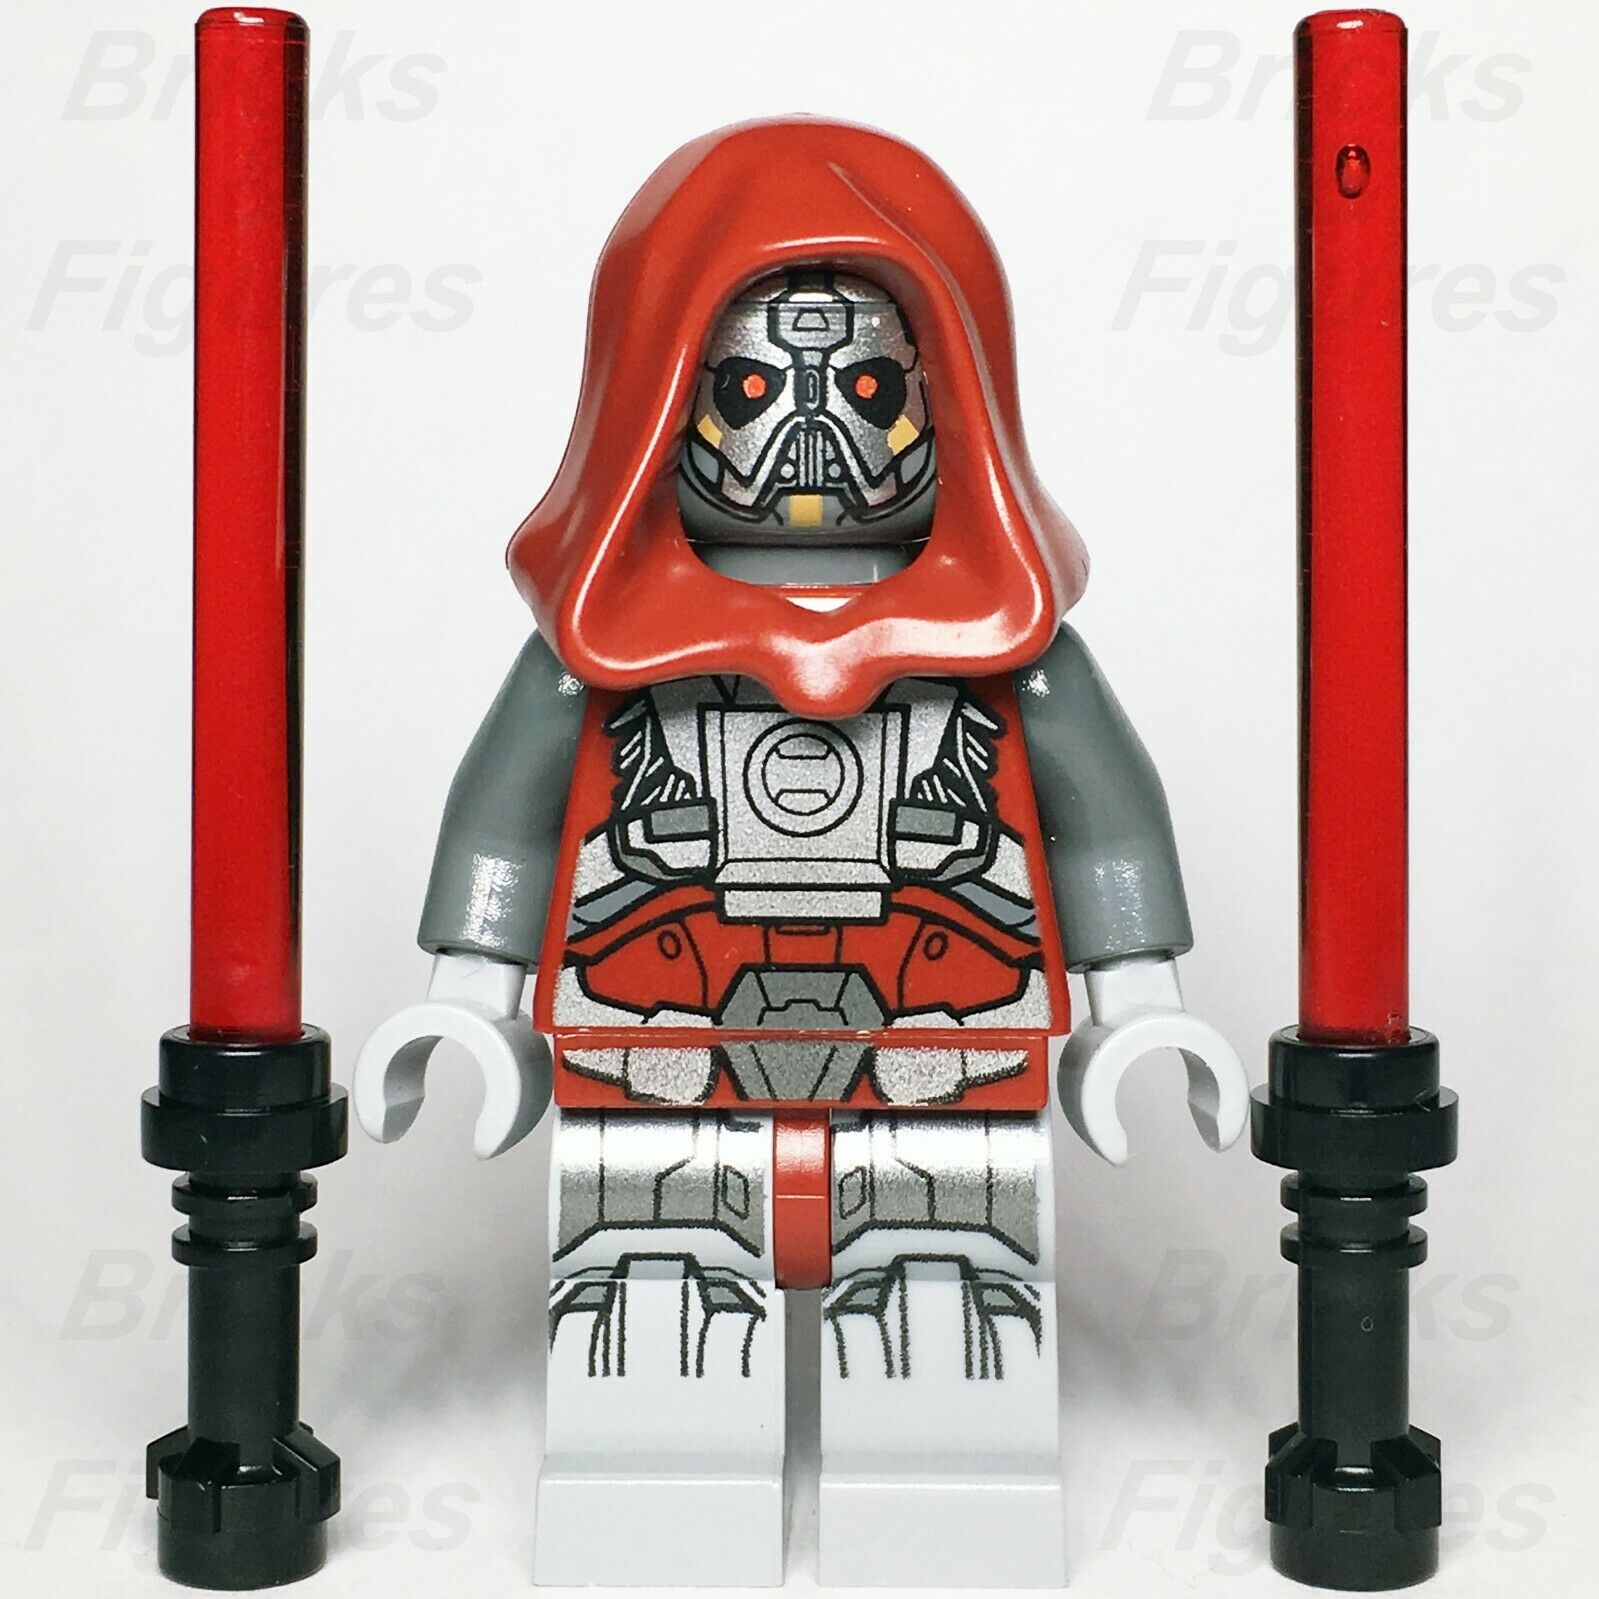 New Star Wars LEGO Sith Warrior Lord The Old Republic Minifigure 75025 - Bricks & Figures